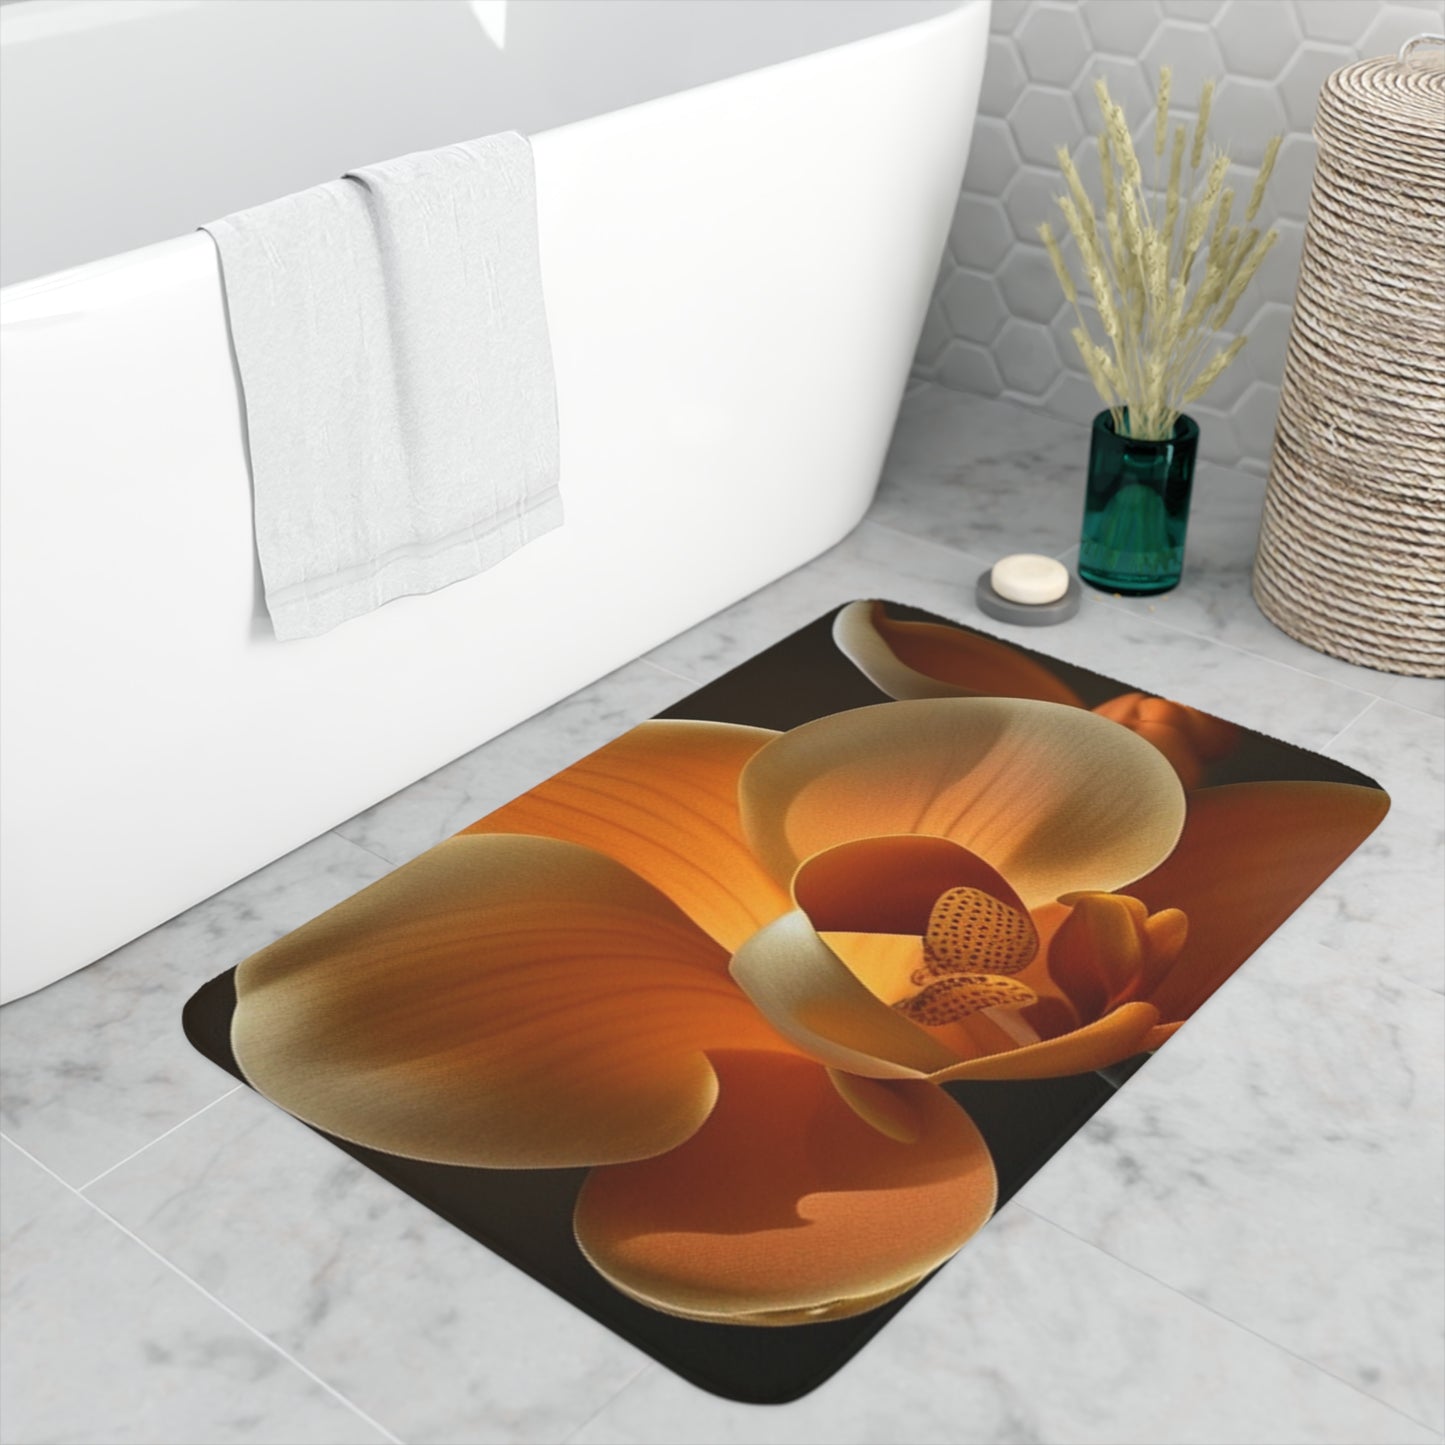 Memory Foam Bath Mat Orange Orchid 4